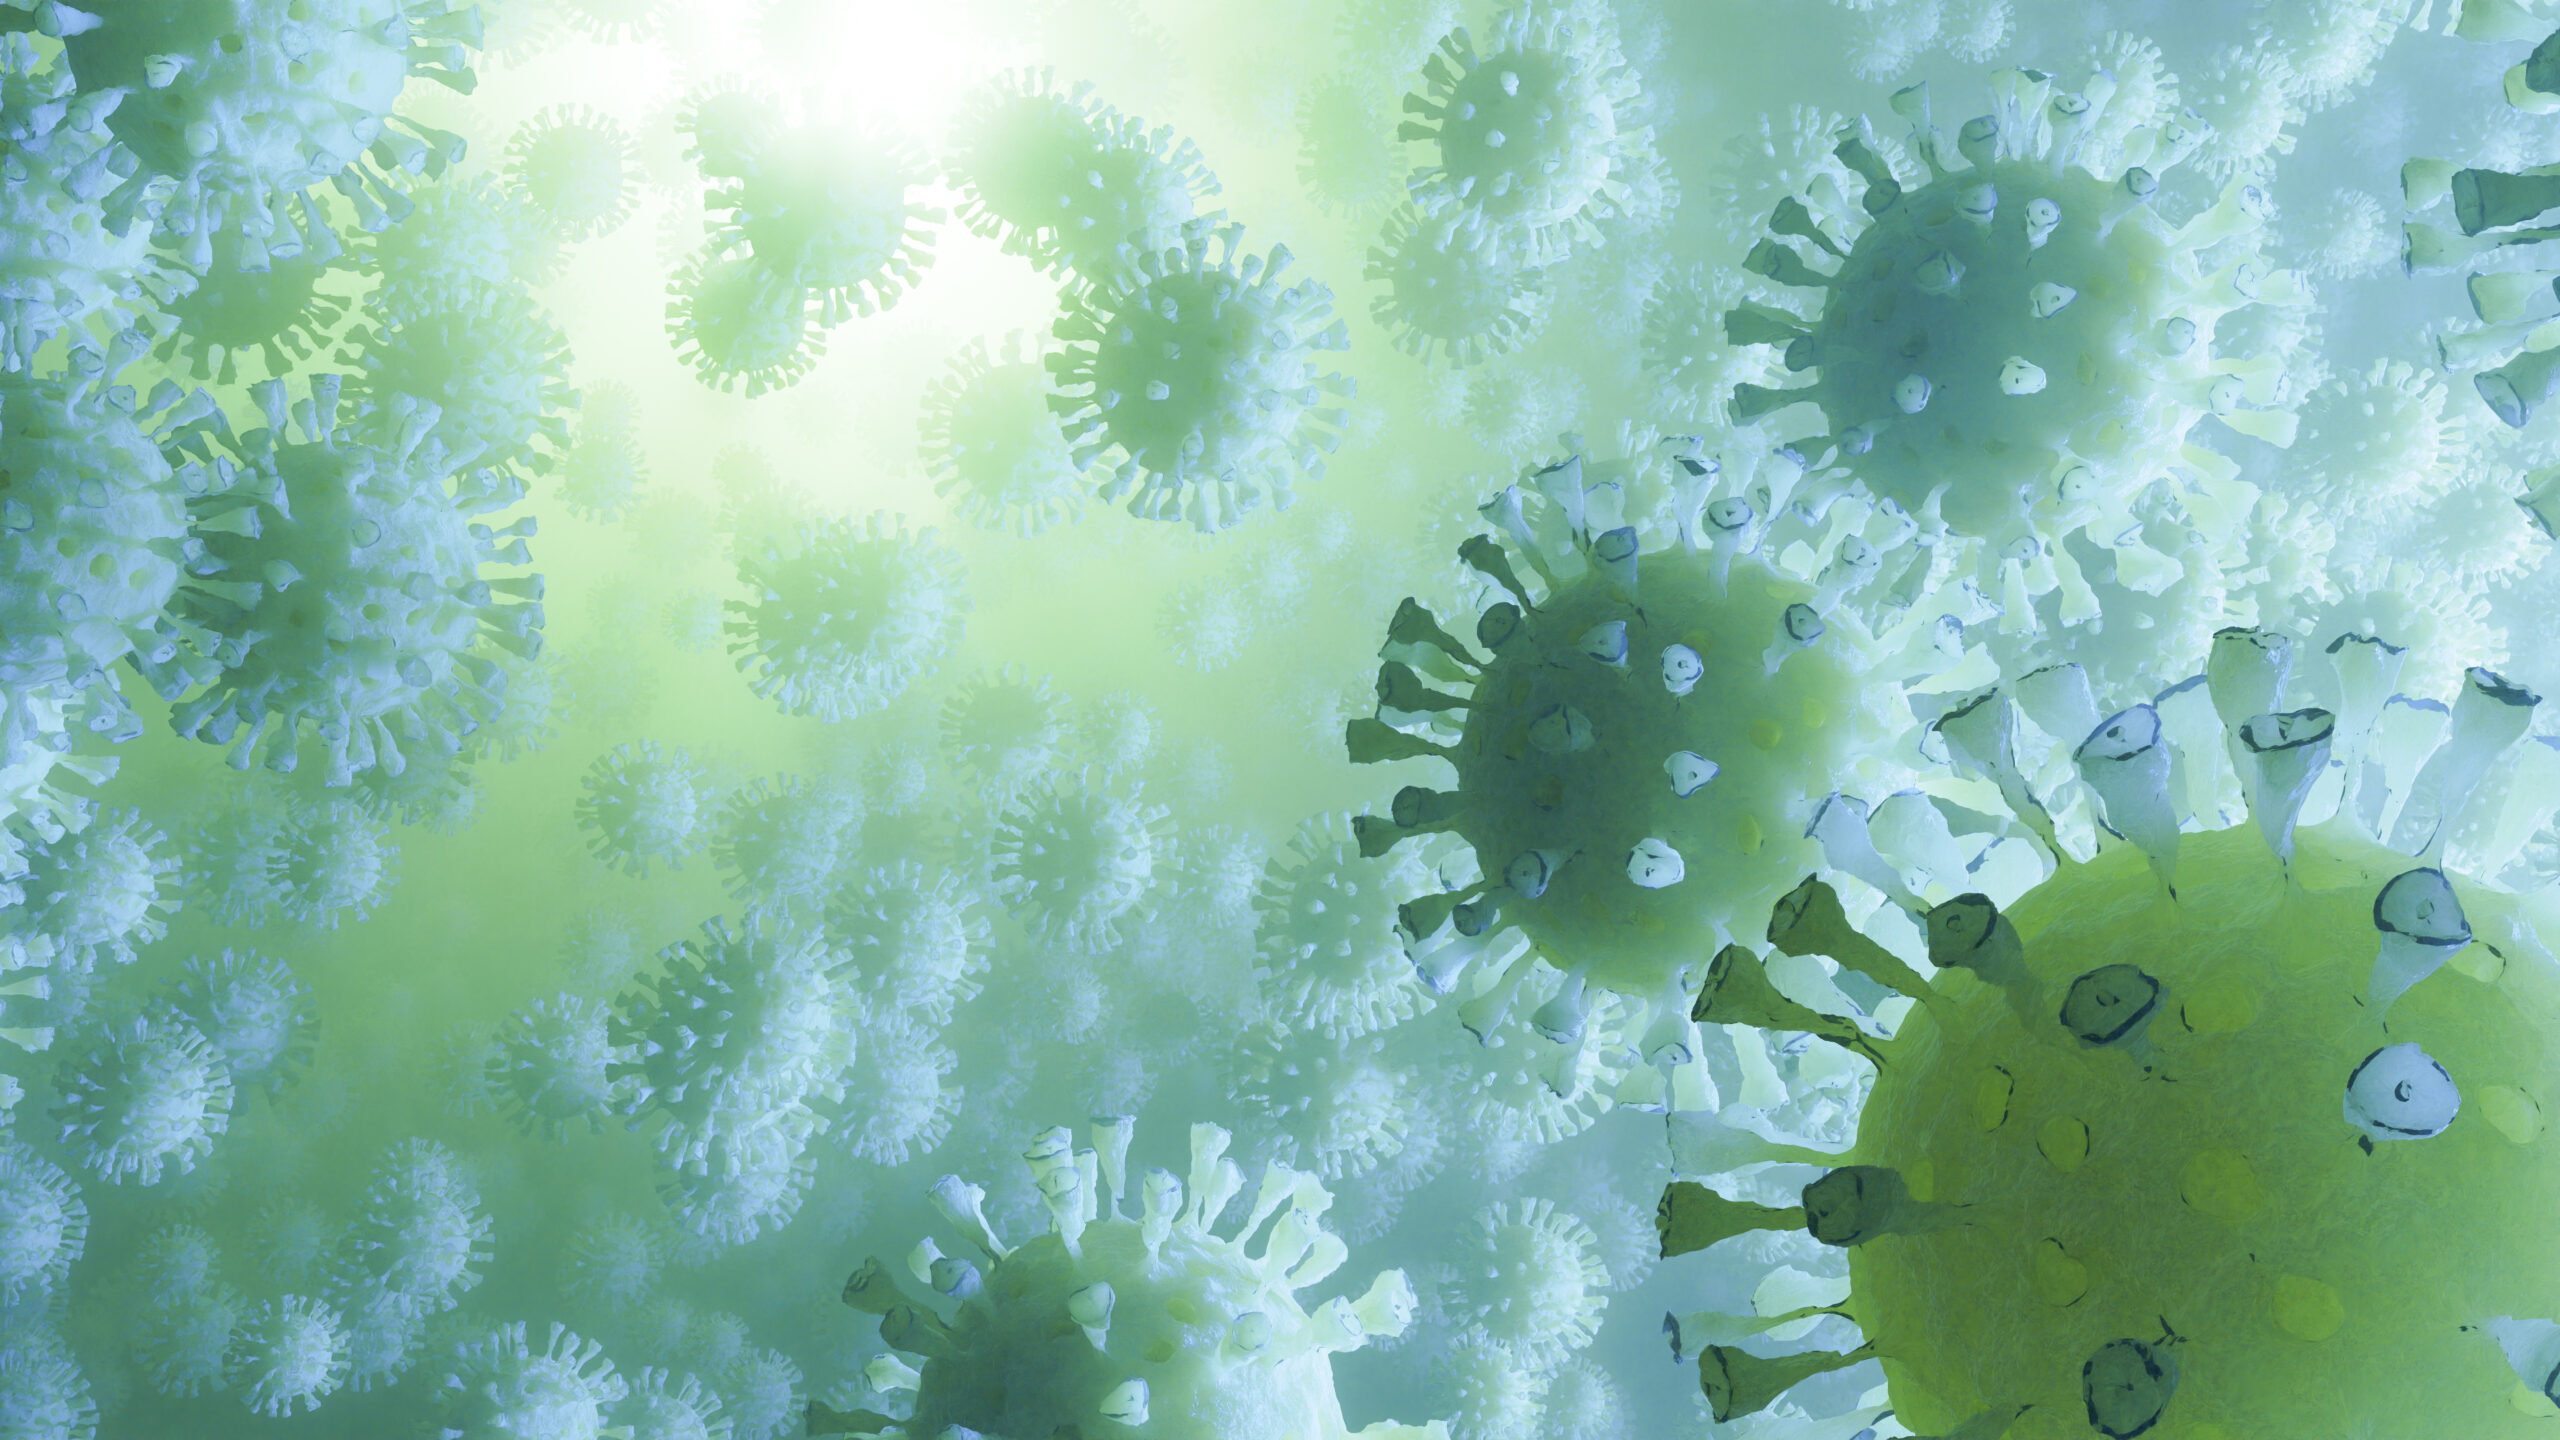 A concept image of the novel coronavirus.